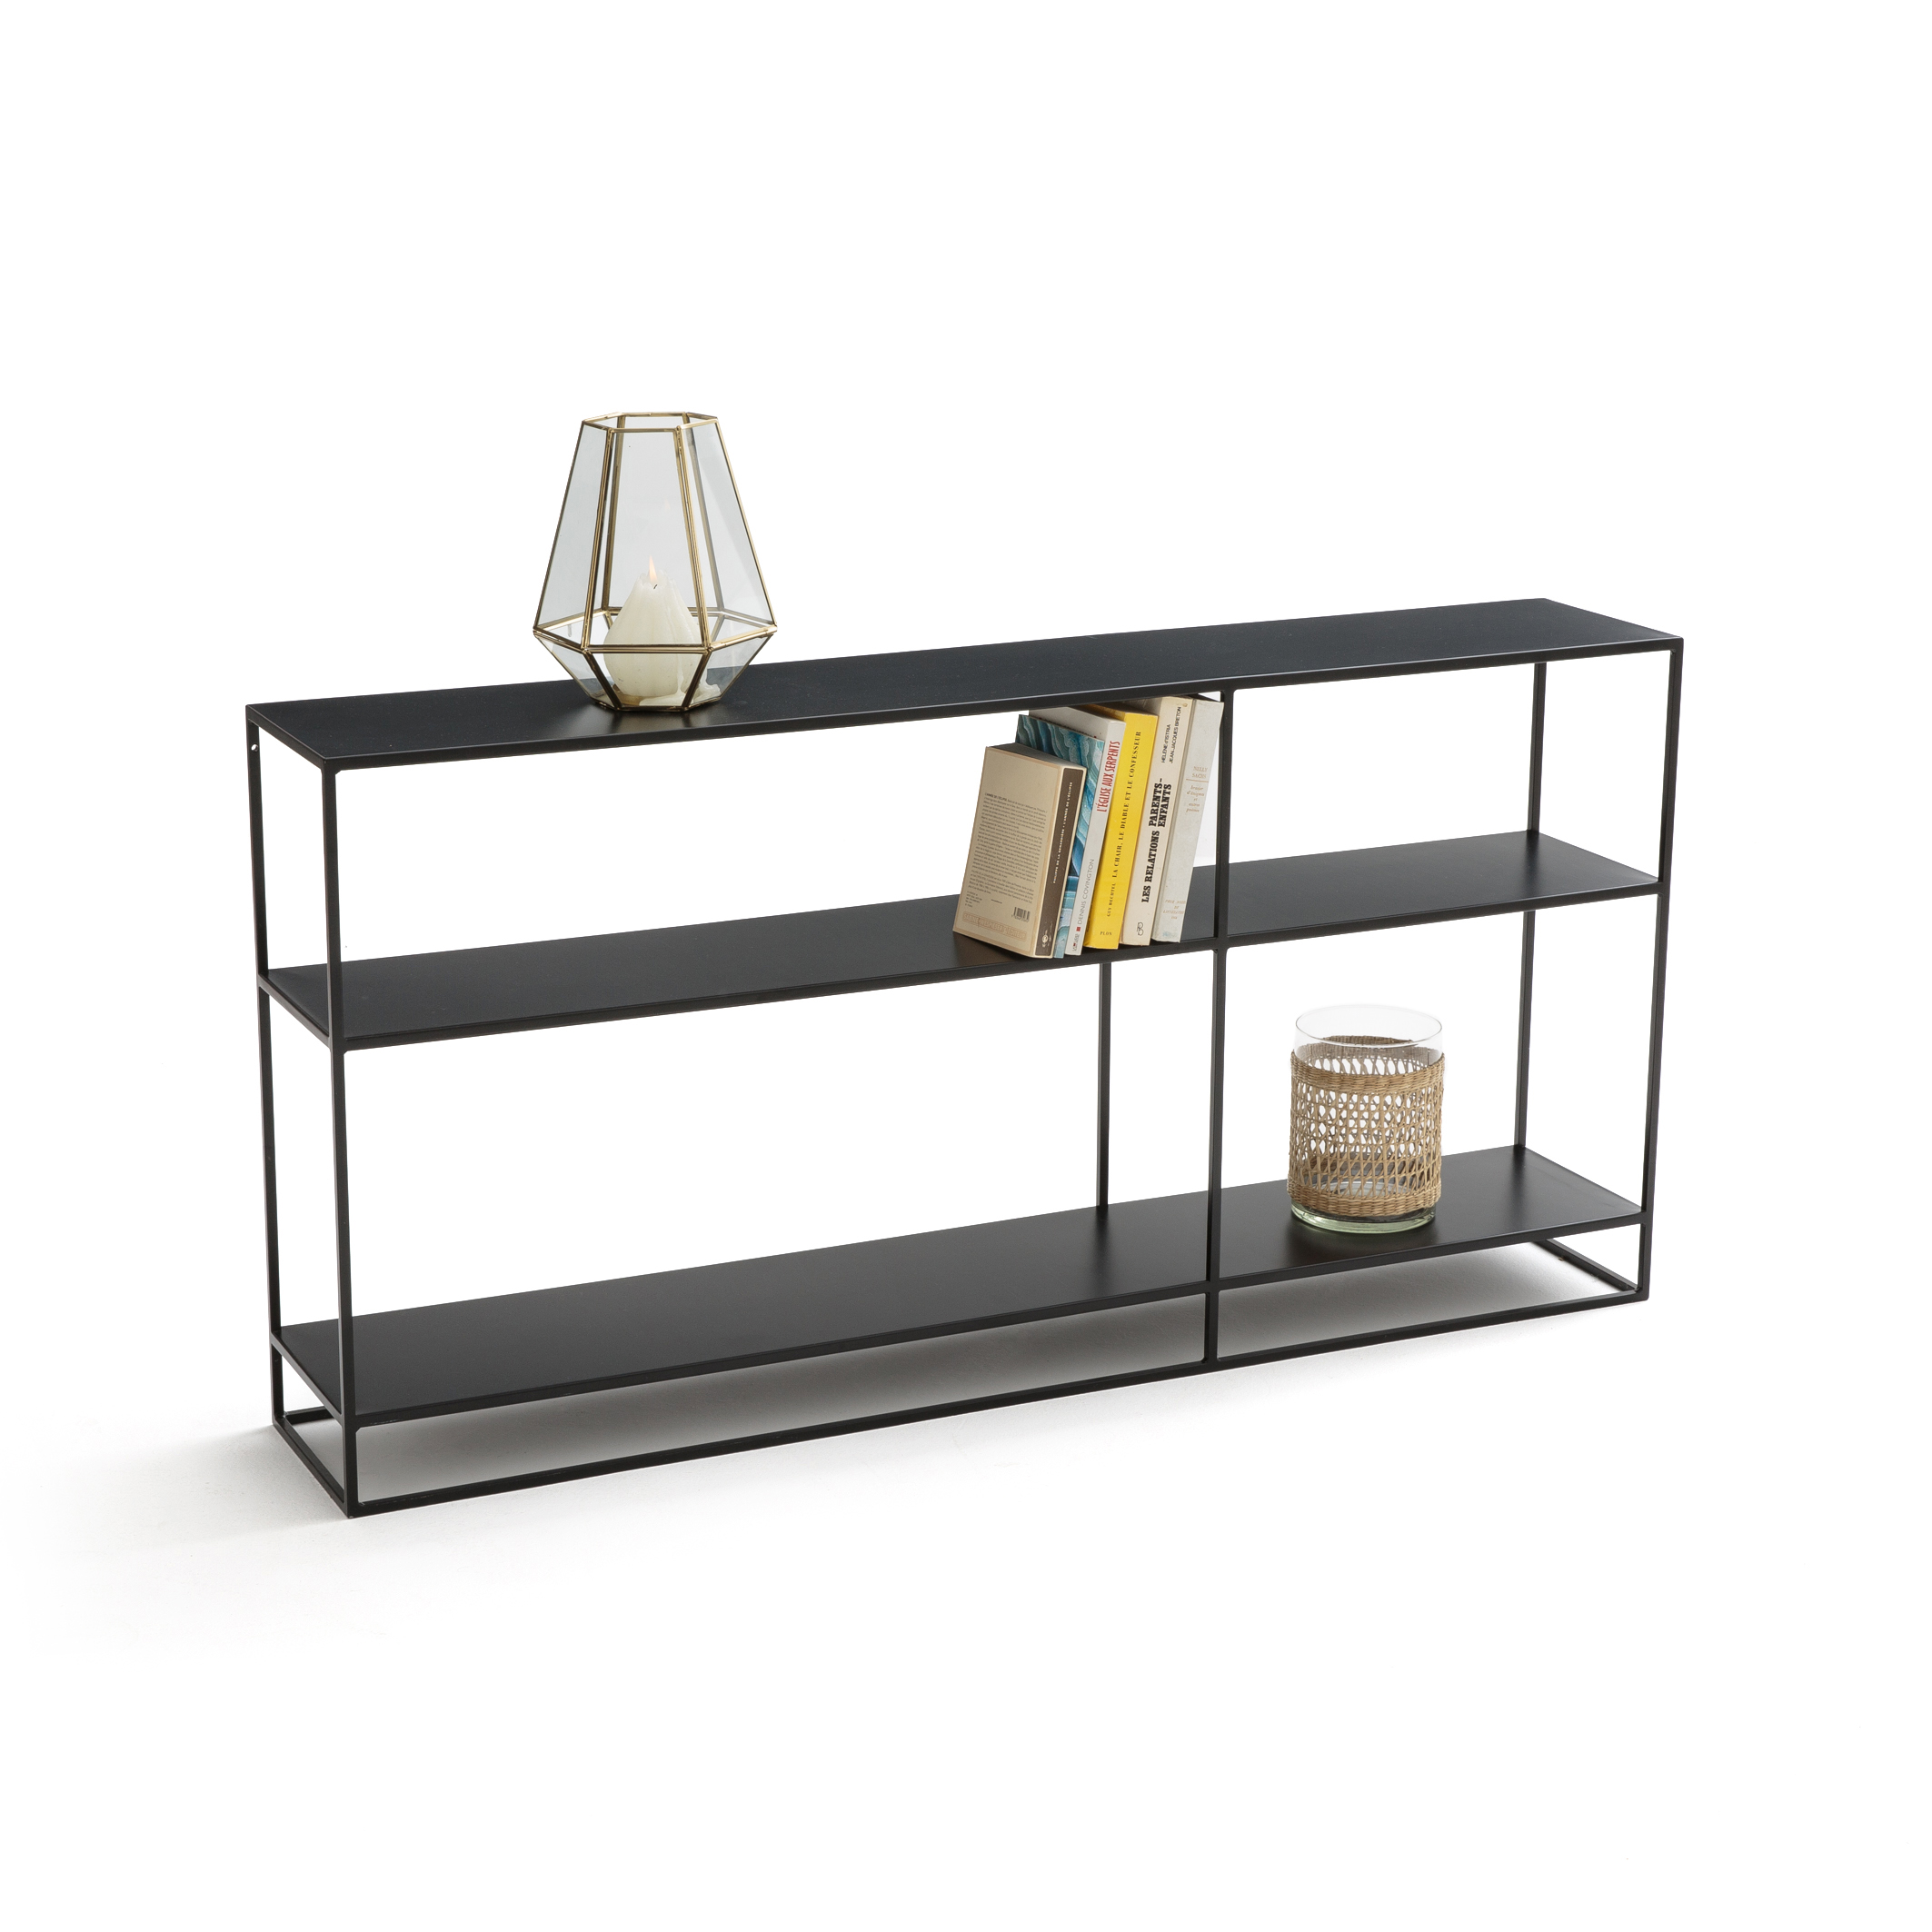 Hiba Low Steel Dual Function Bookshelf, Black Metal Bookcase With Glass Shelves